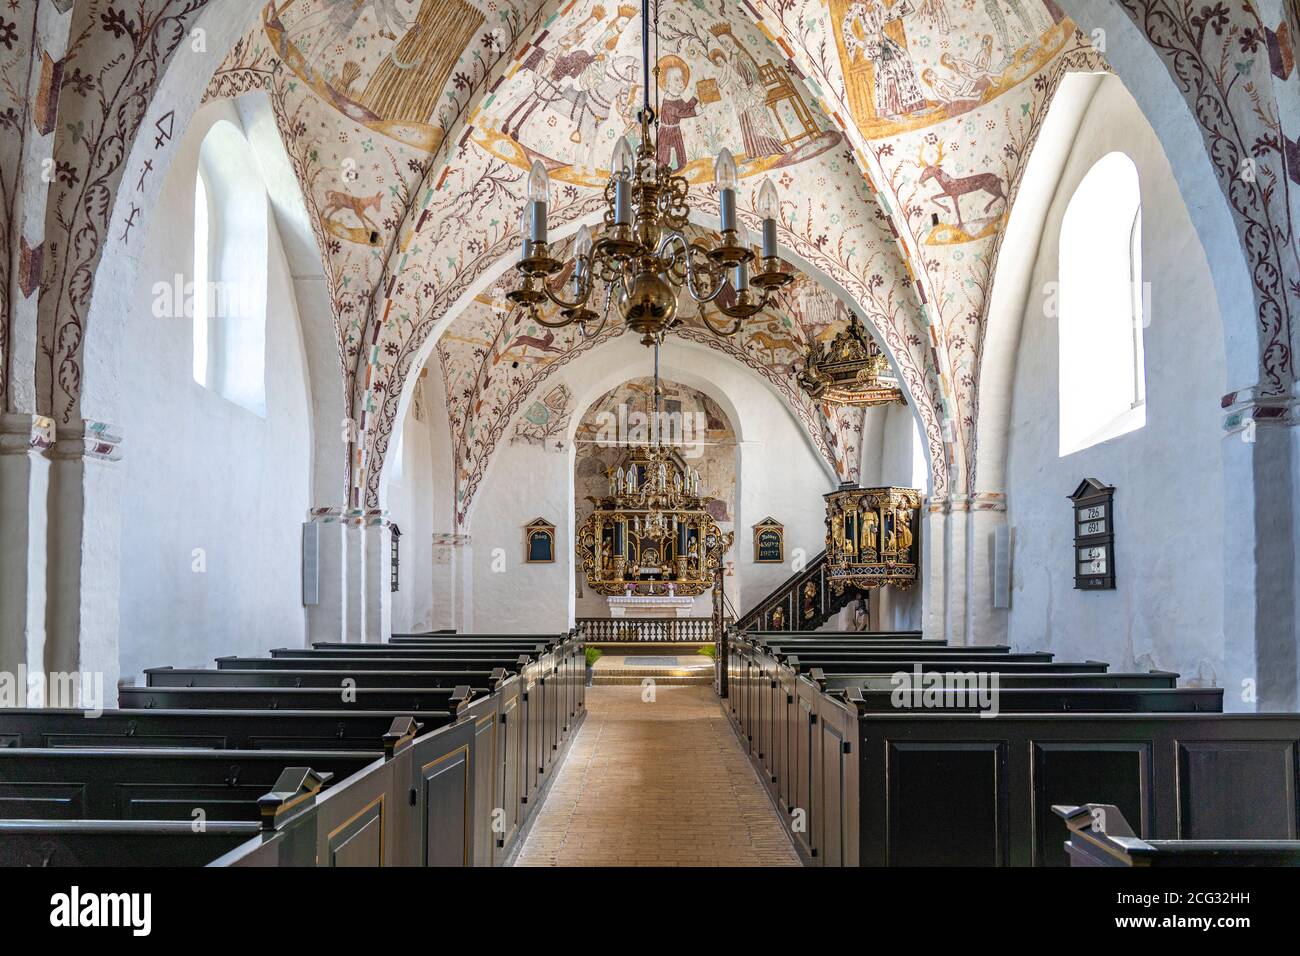 Innenraum mit religiösen Fresken des Elmelunde-Meisters in der Kirche von Elmelunde, Insel Mön, Dänemark, Europa |  Religious frescos of the Elmelunde Stock Photo